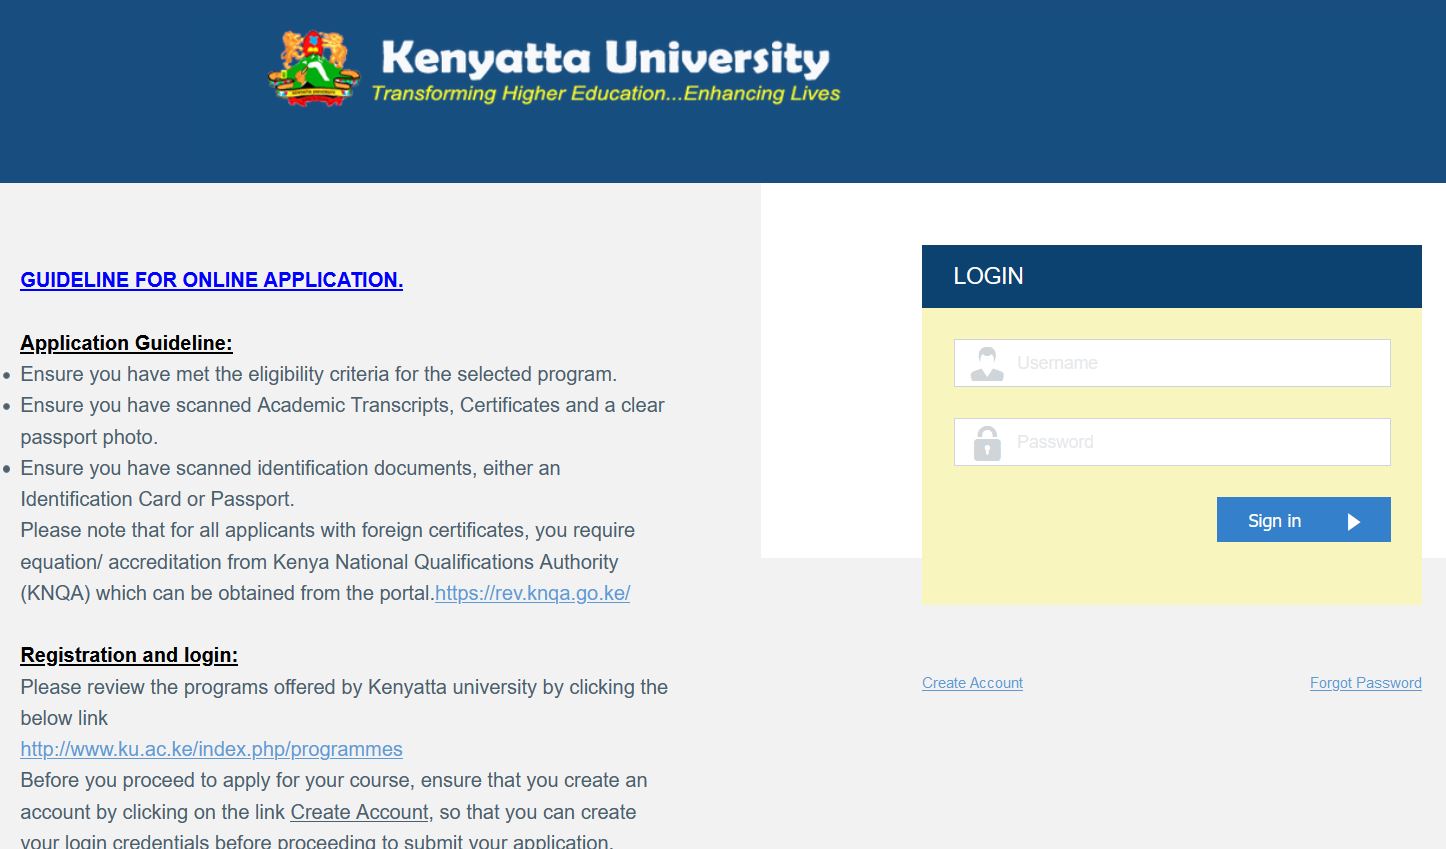 How to apply for Kenyatta University intake online